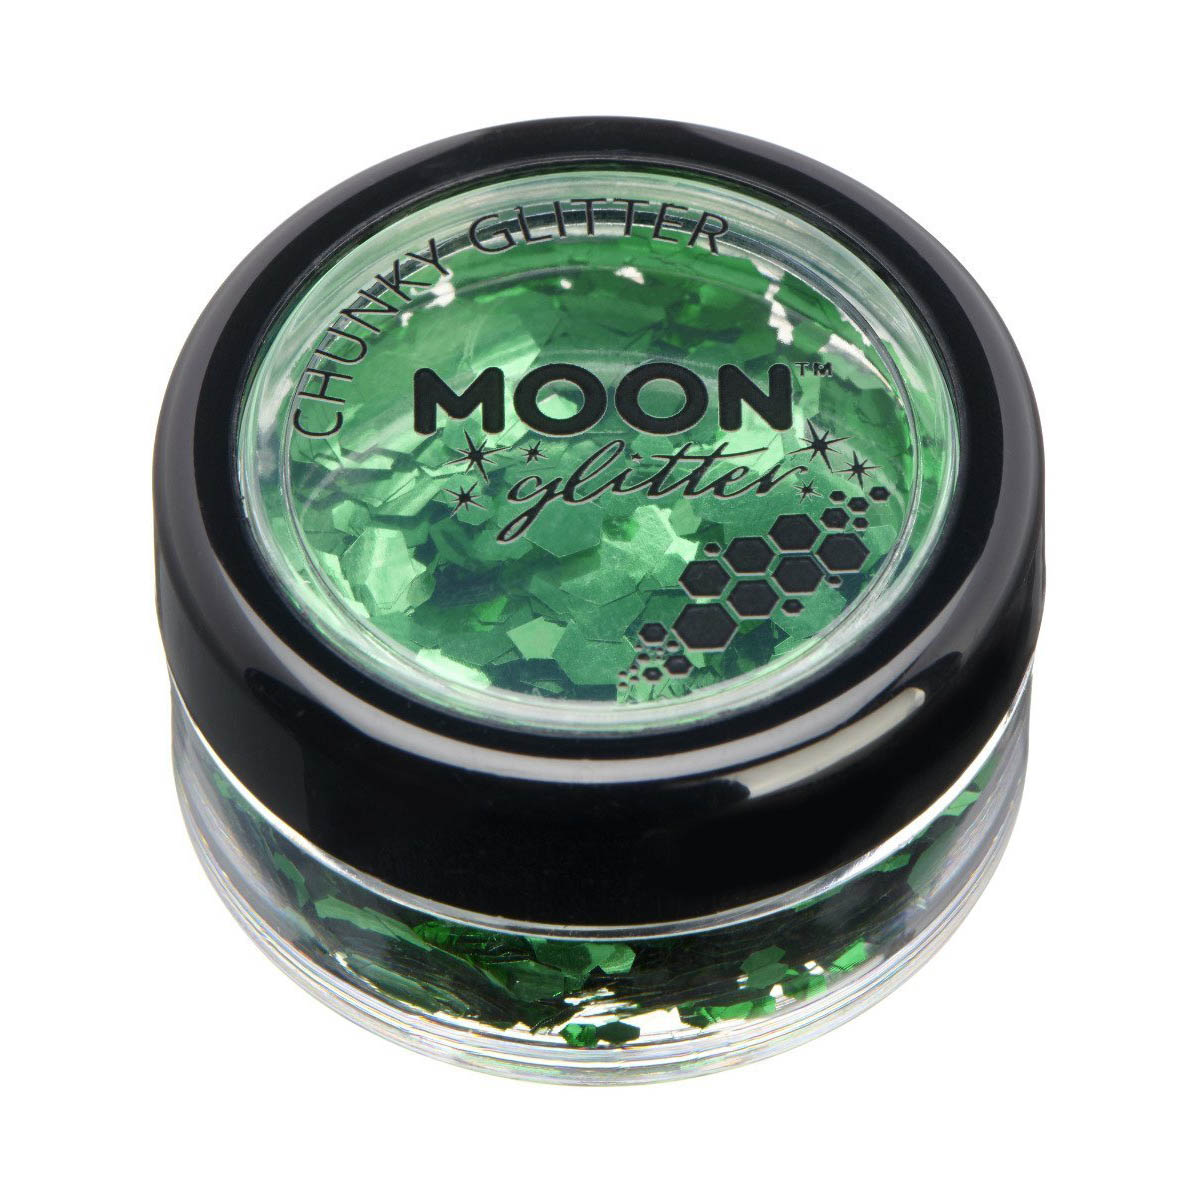 Moon kroppsglitter, chunky 5g Grön